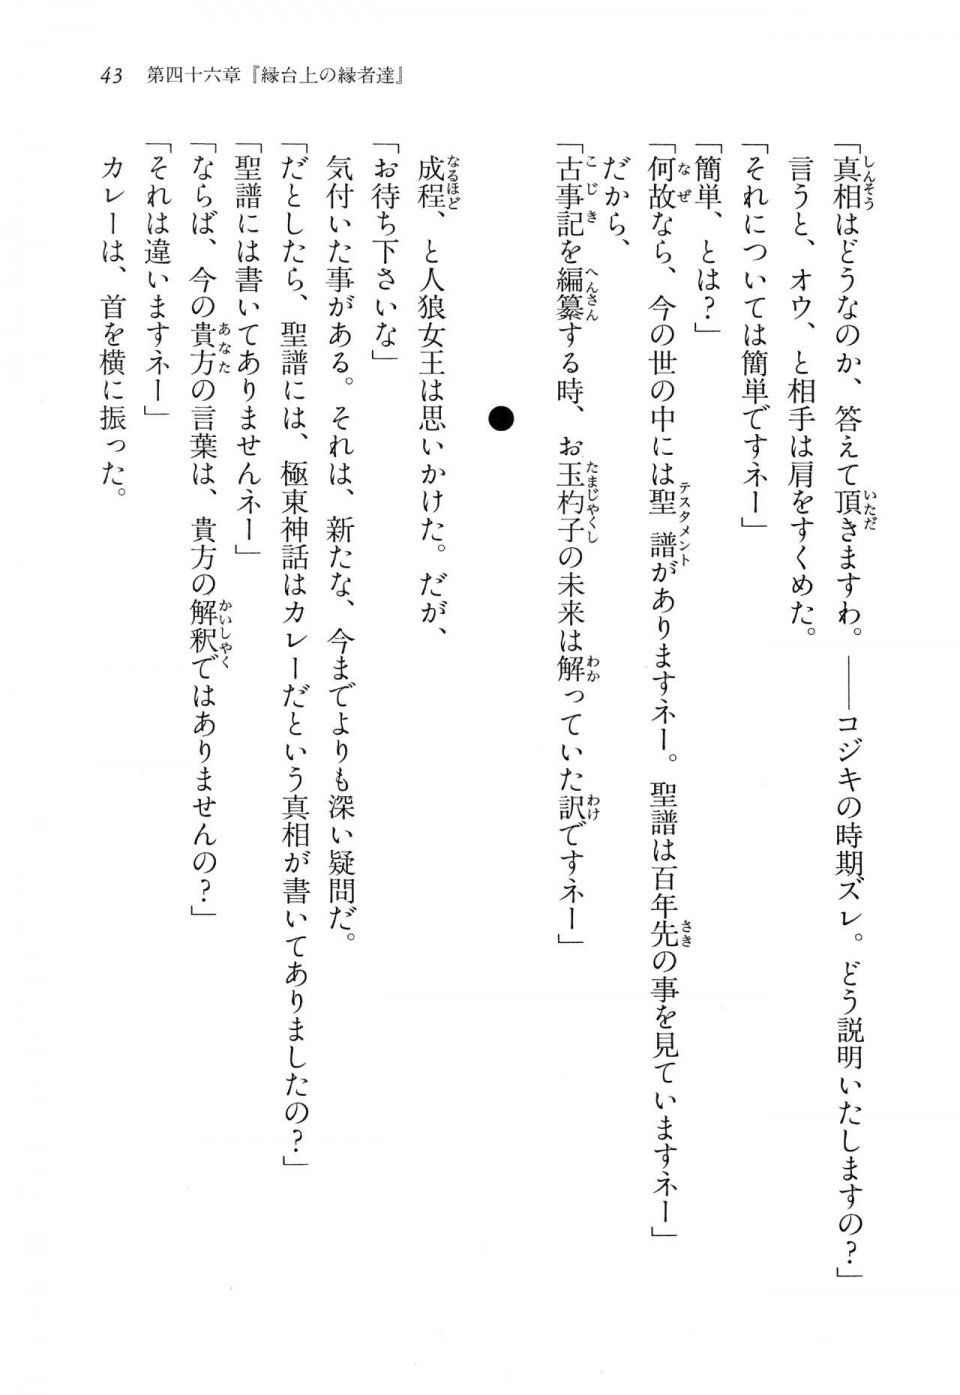 Kyoukai Senjou no Horizon LN Vol 15(6C) Part 1 - Photo #43